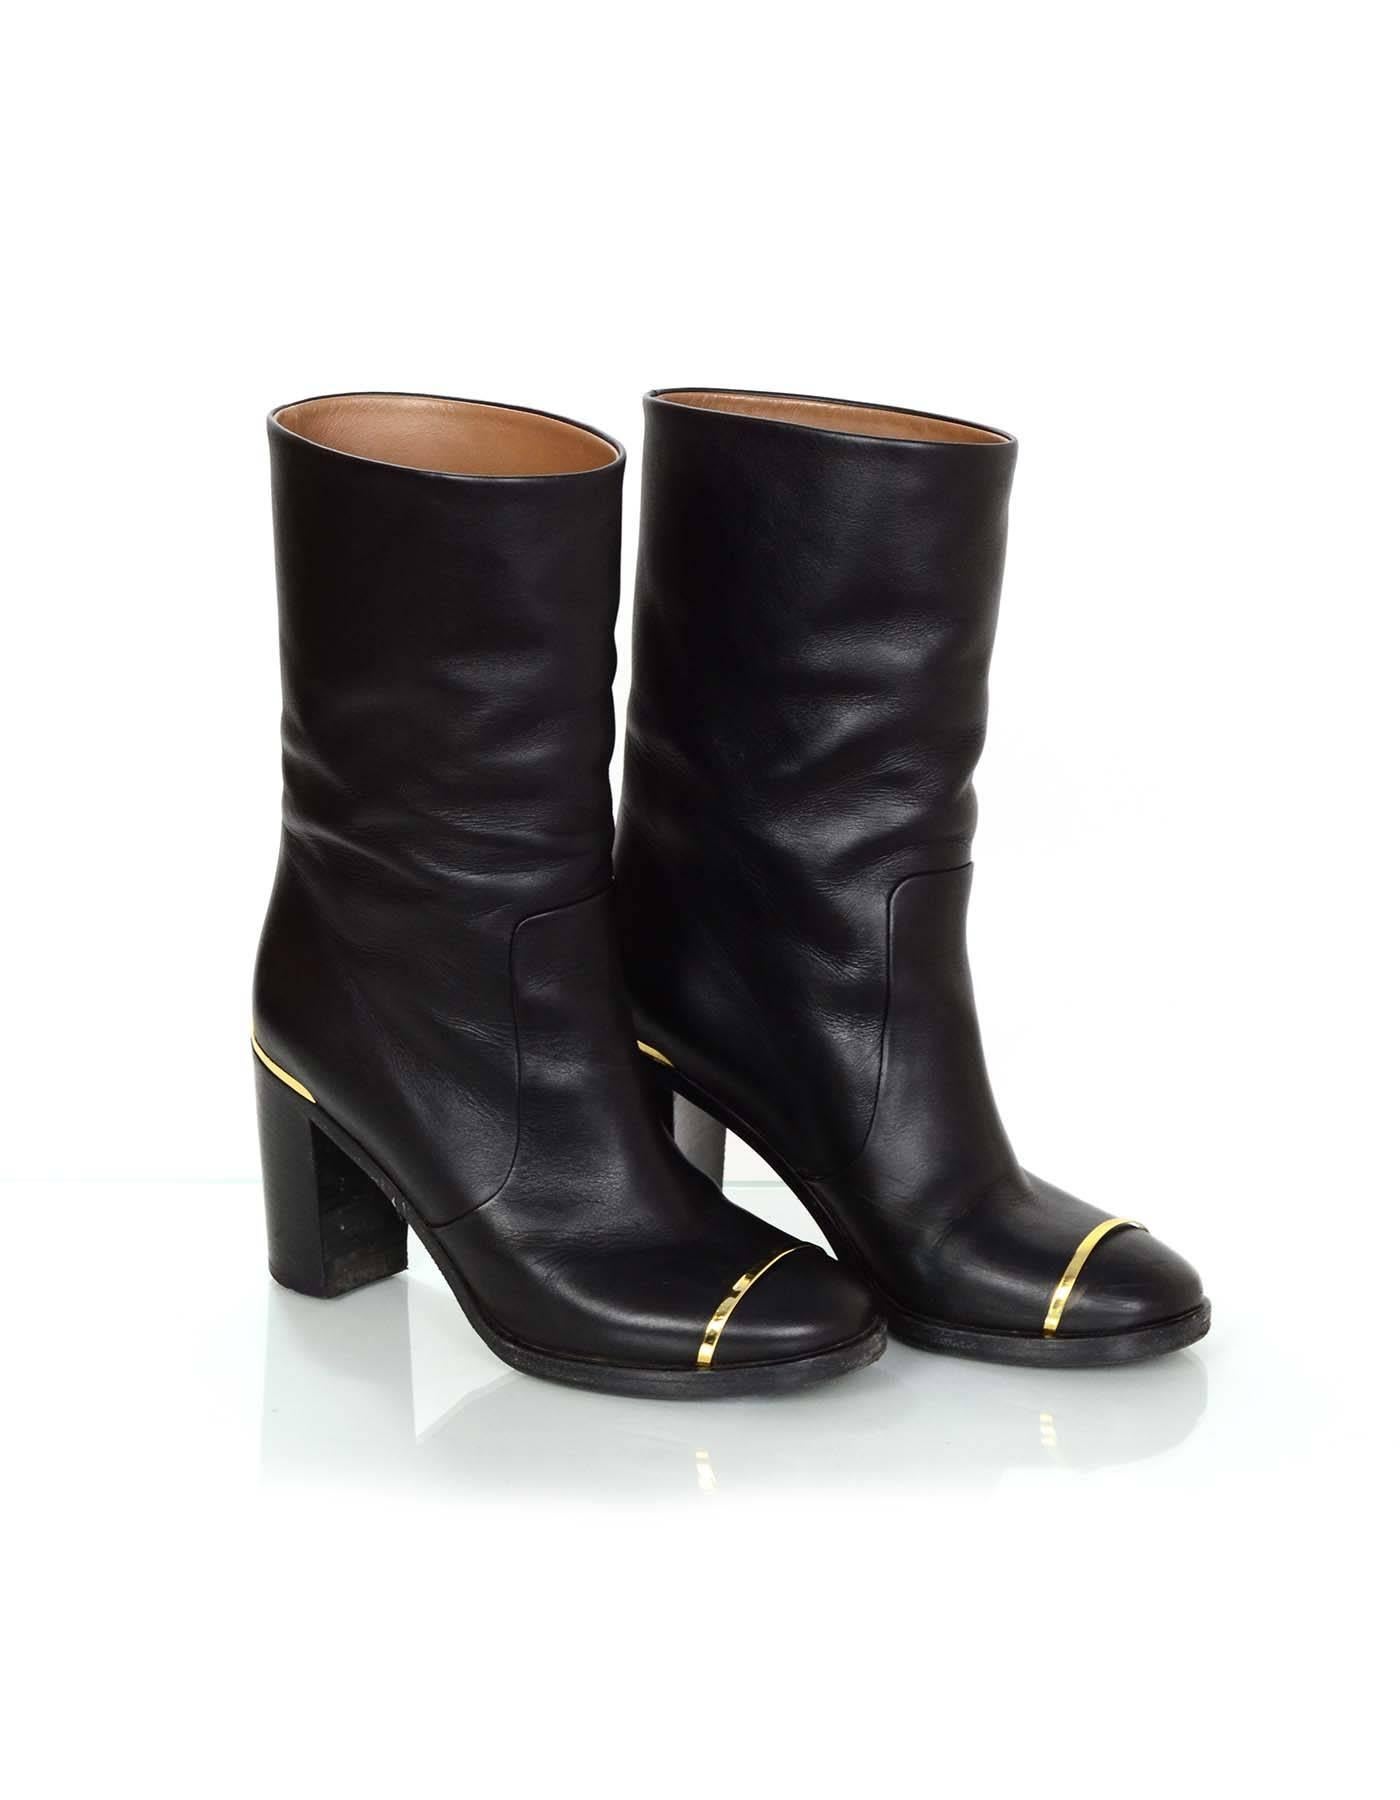 Women's Chanel Black Leather Boots Sz 37.5